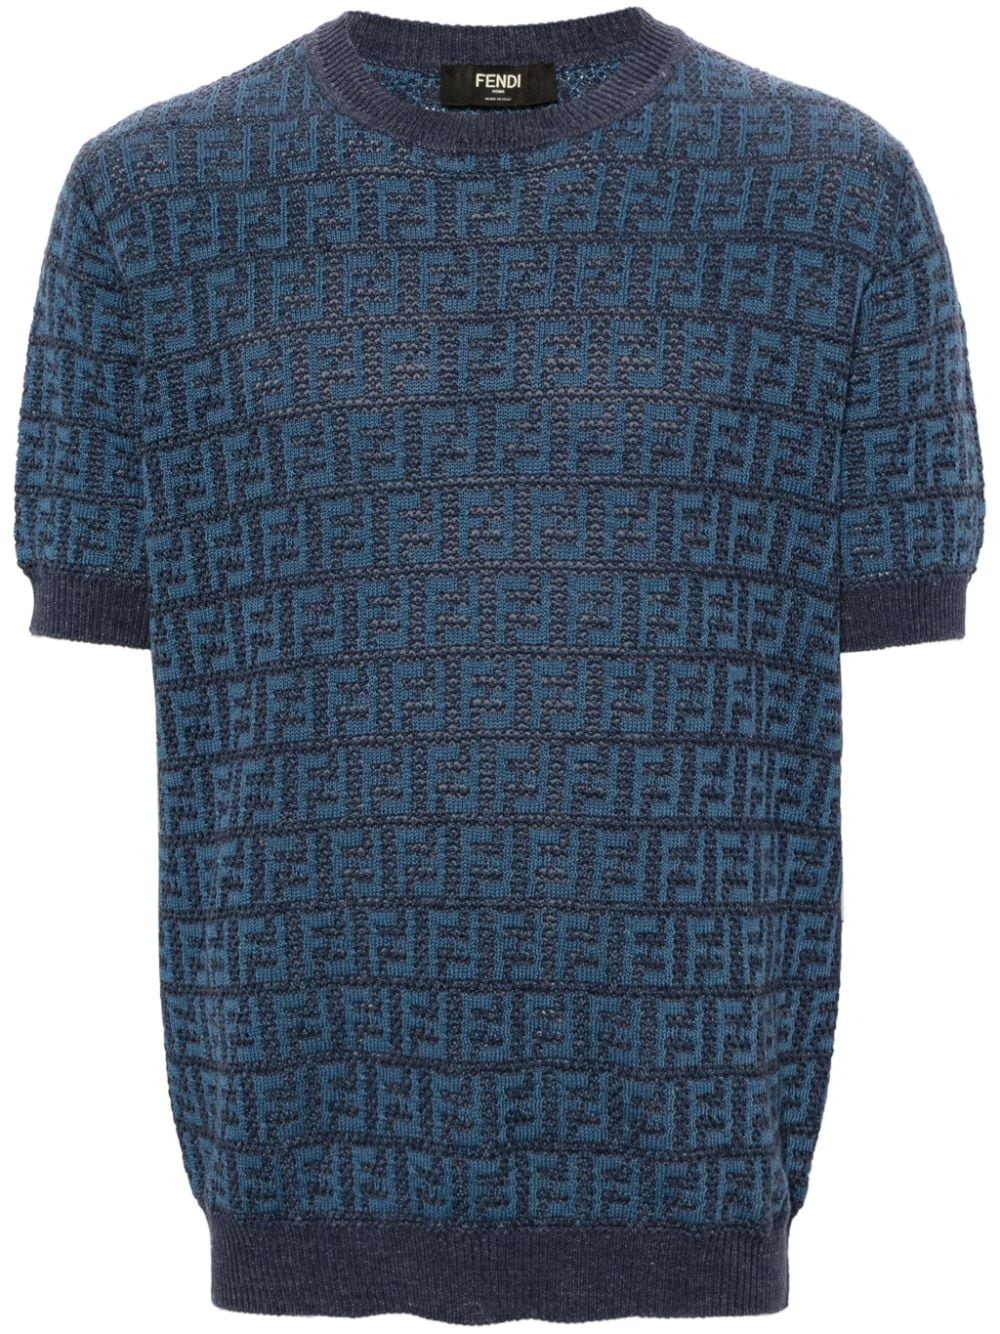 Fendi Ff-jacquard Knitted Jumper In Blue